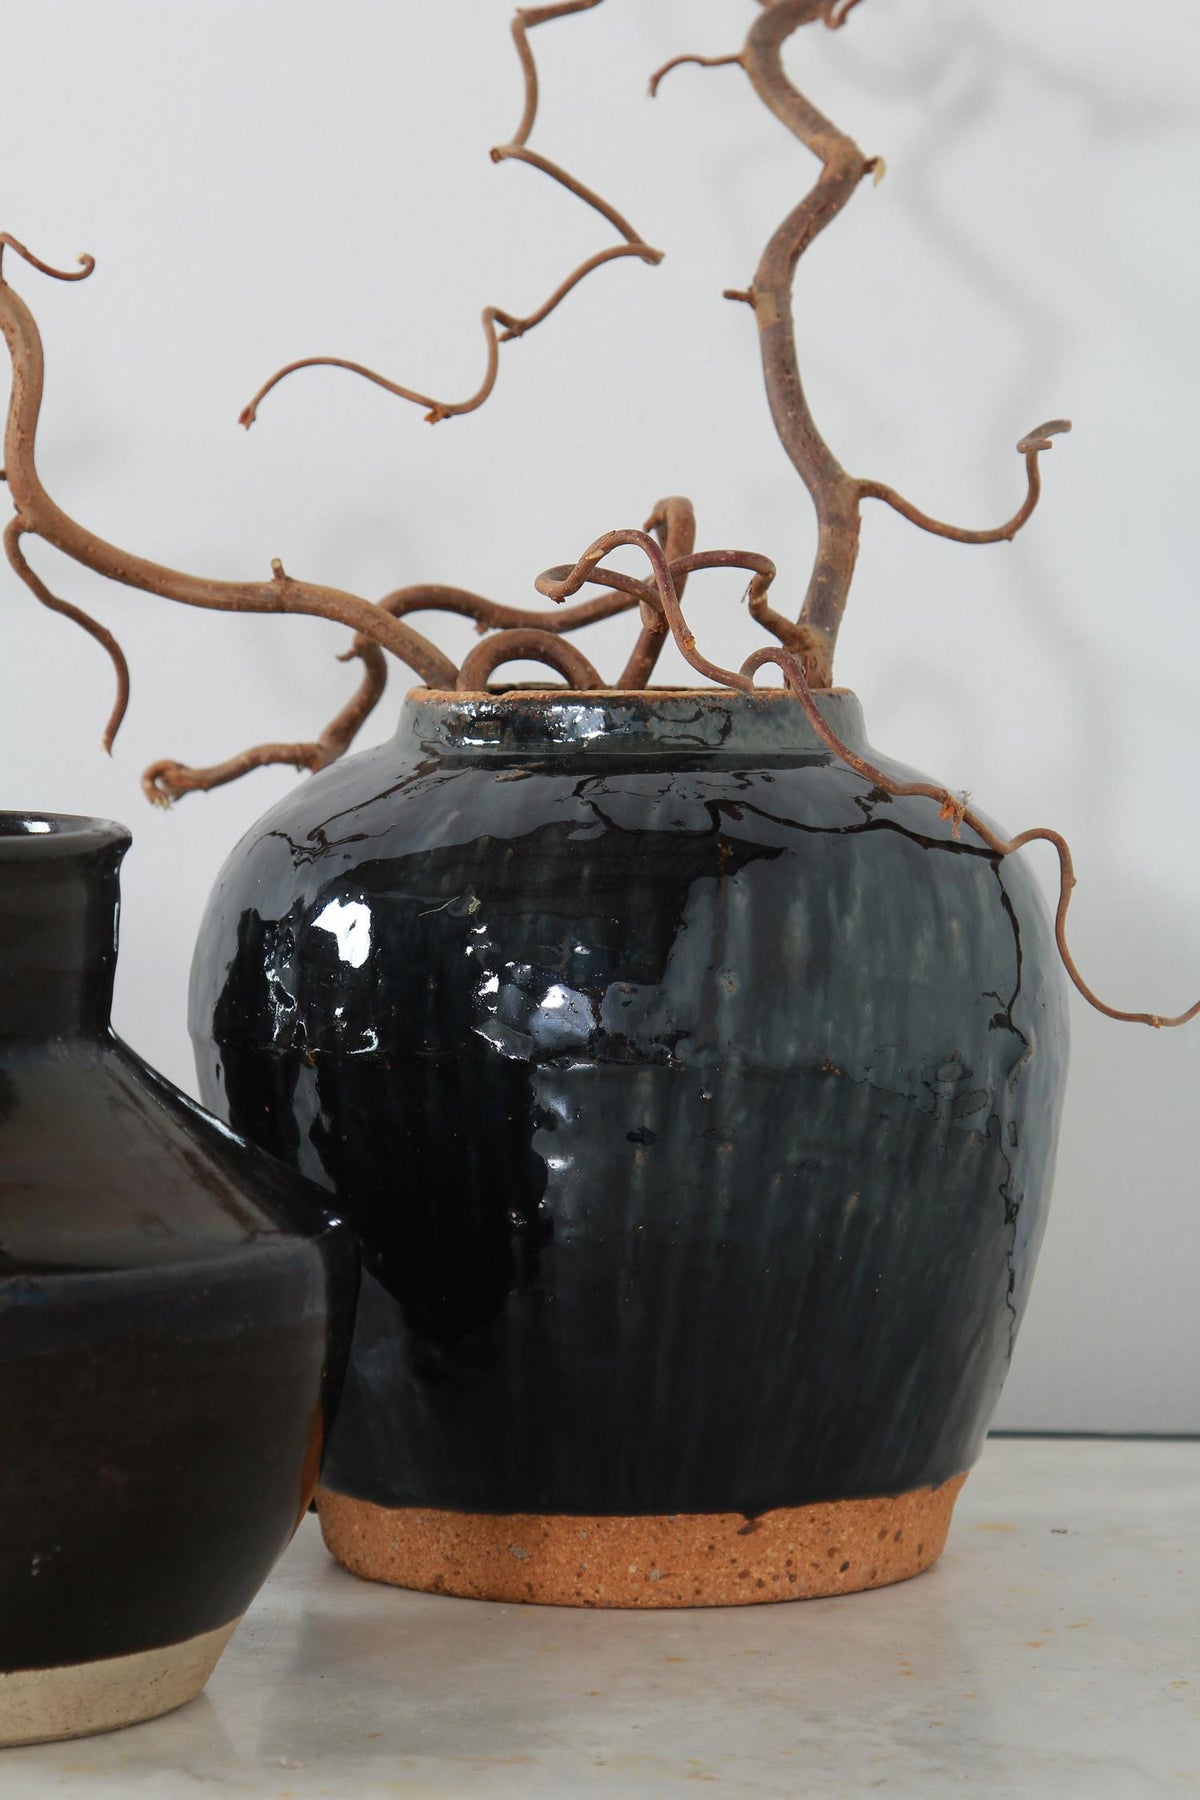 Handmade Chinese  Black Glazed Pottery Jars